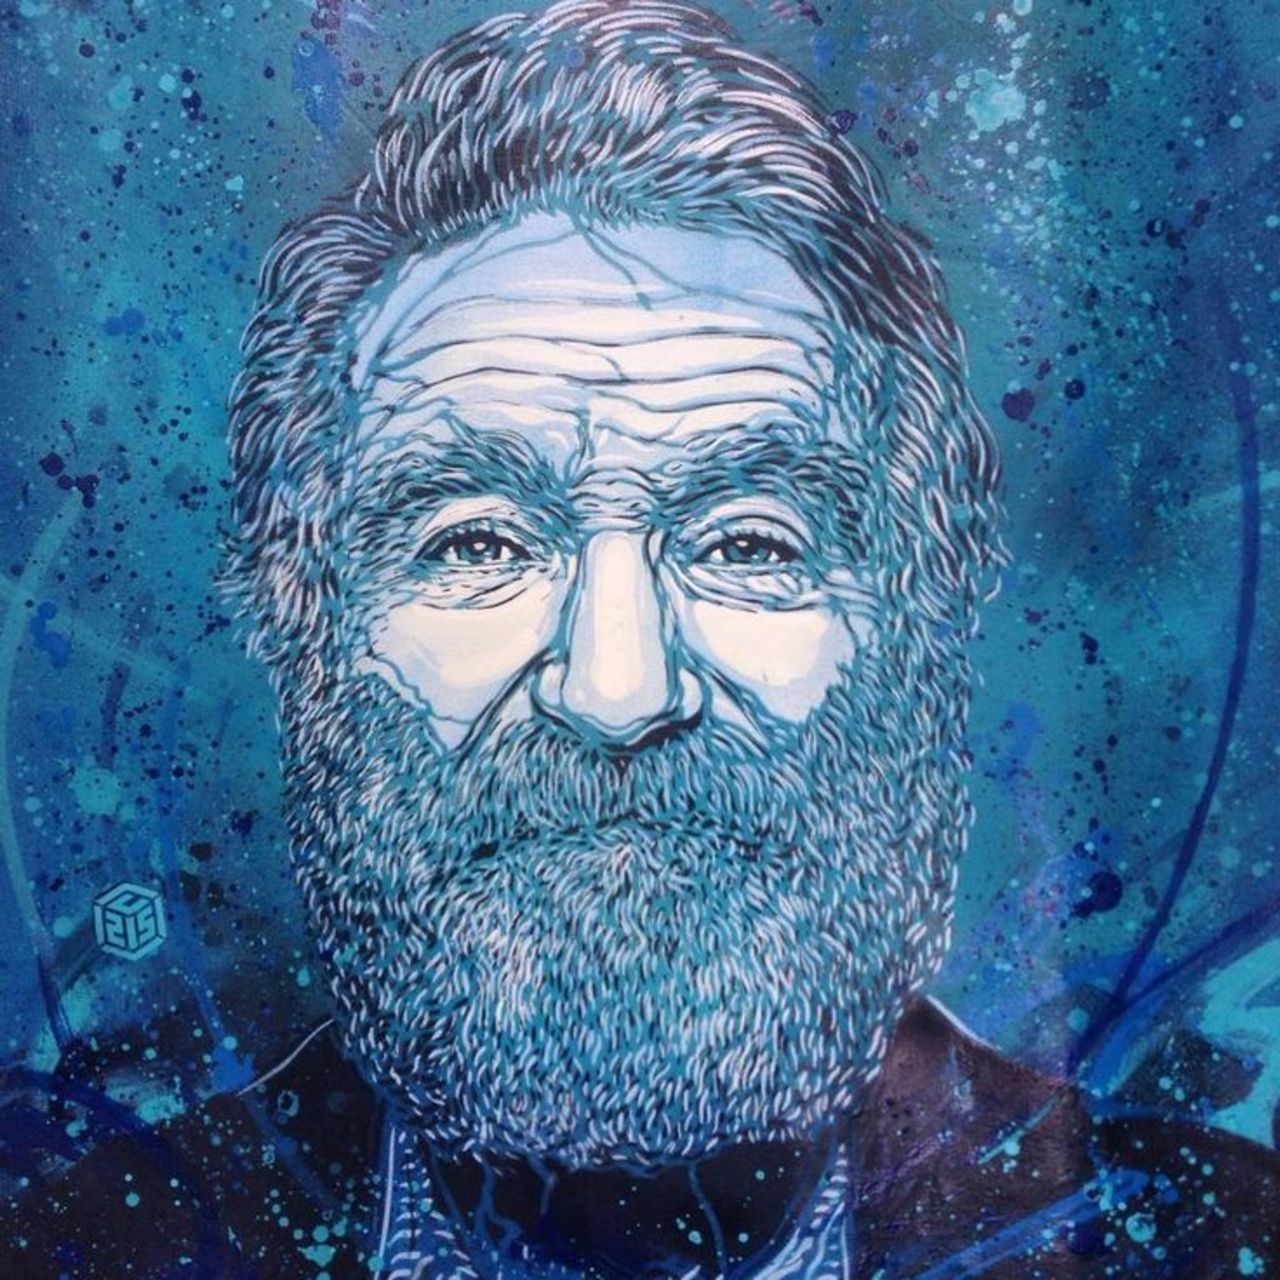 Robin Williams Tribute by C215 #streetart #mural #graffiti #art https://t.co/vwLcyrtjt8